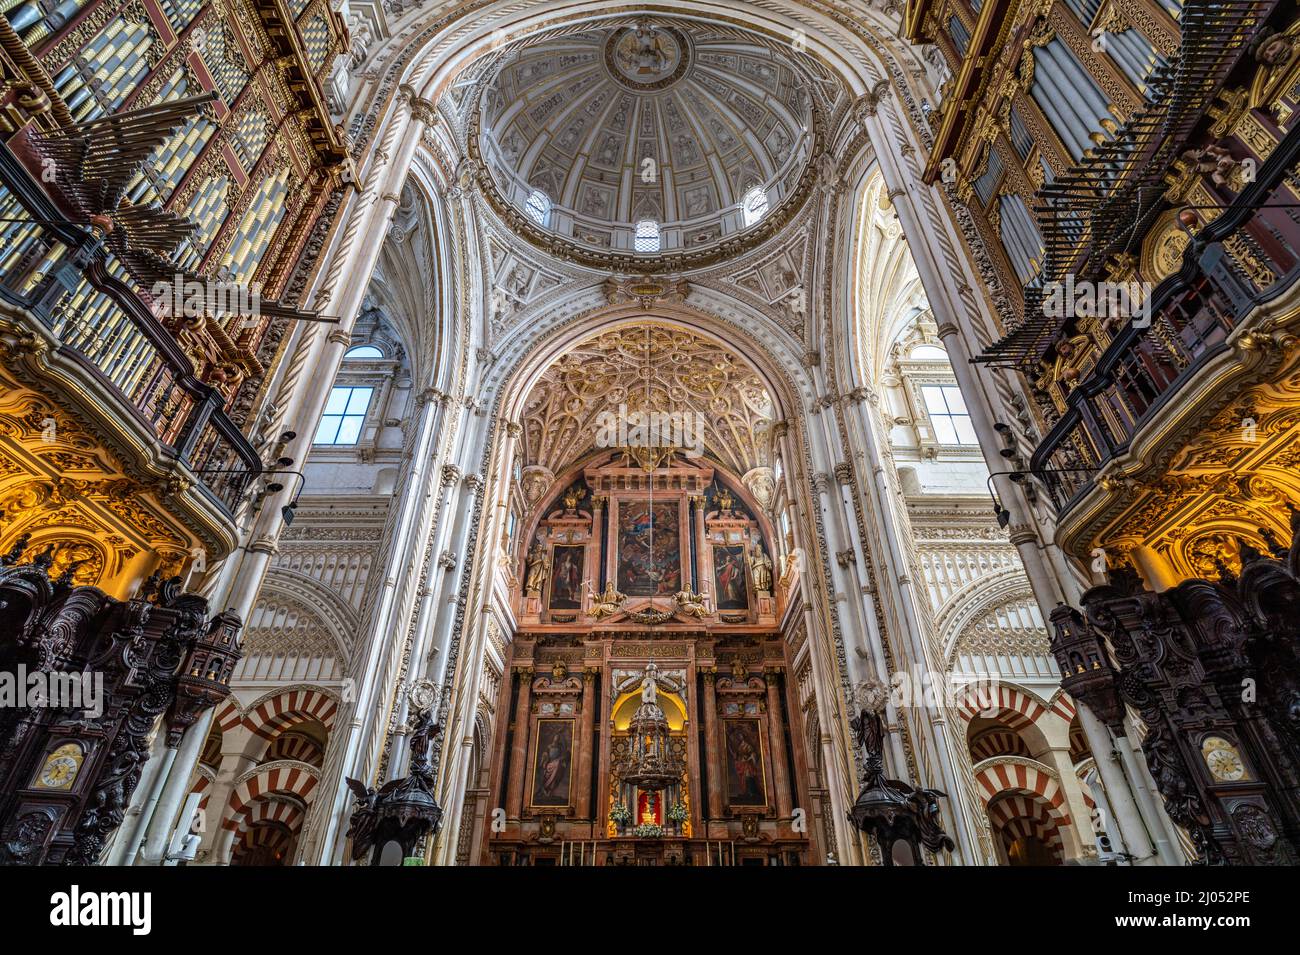 Innenraum der Kathedrale - Mezquita - Catedral de Córdoba in Cordoba, Andalusien, Spanien | Innenraum der Kathedrale - Mezquita - Moschee-Kathedrale von Córd Stockfoto